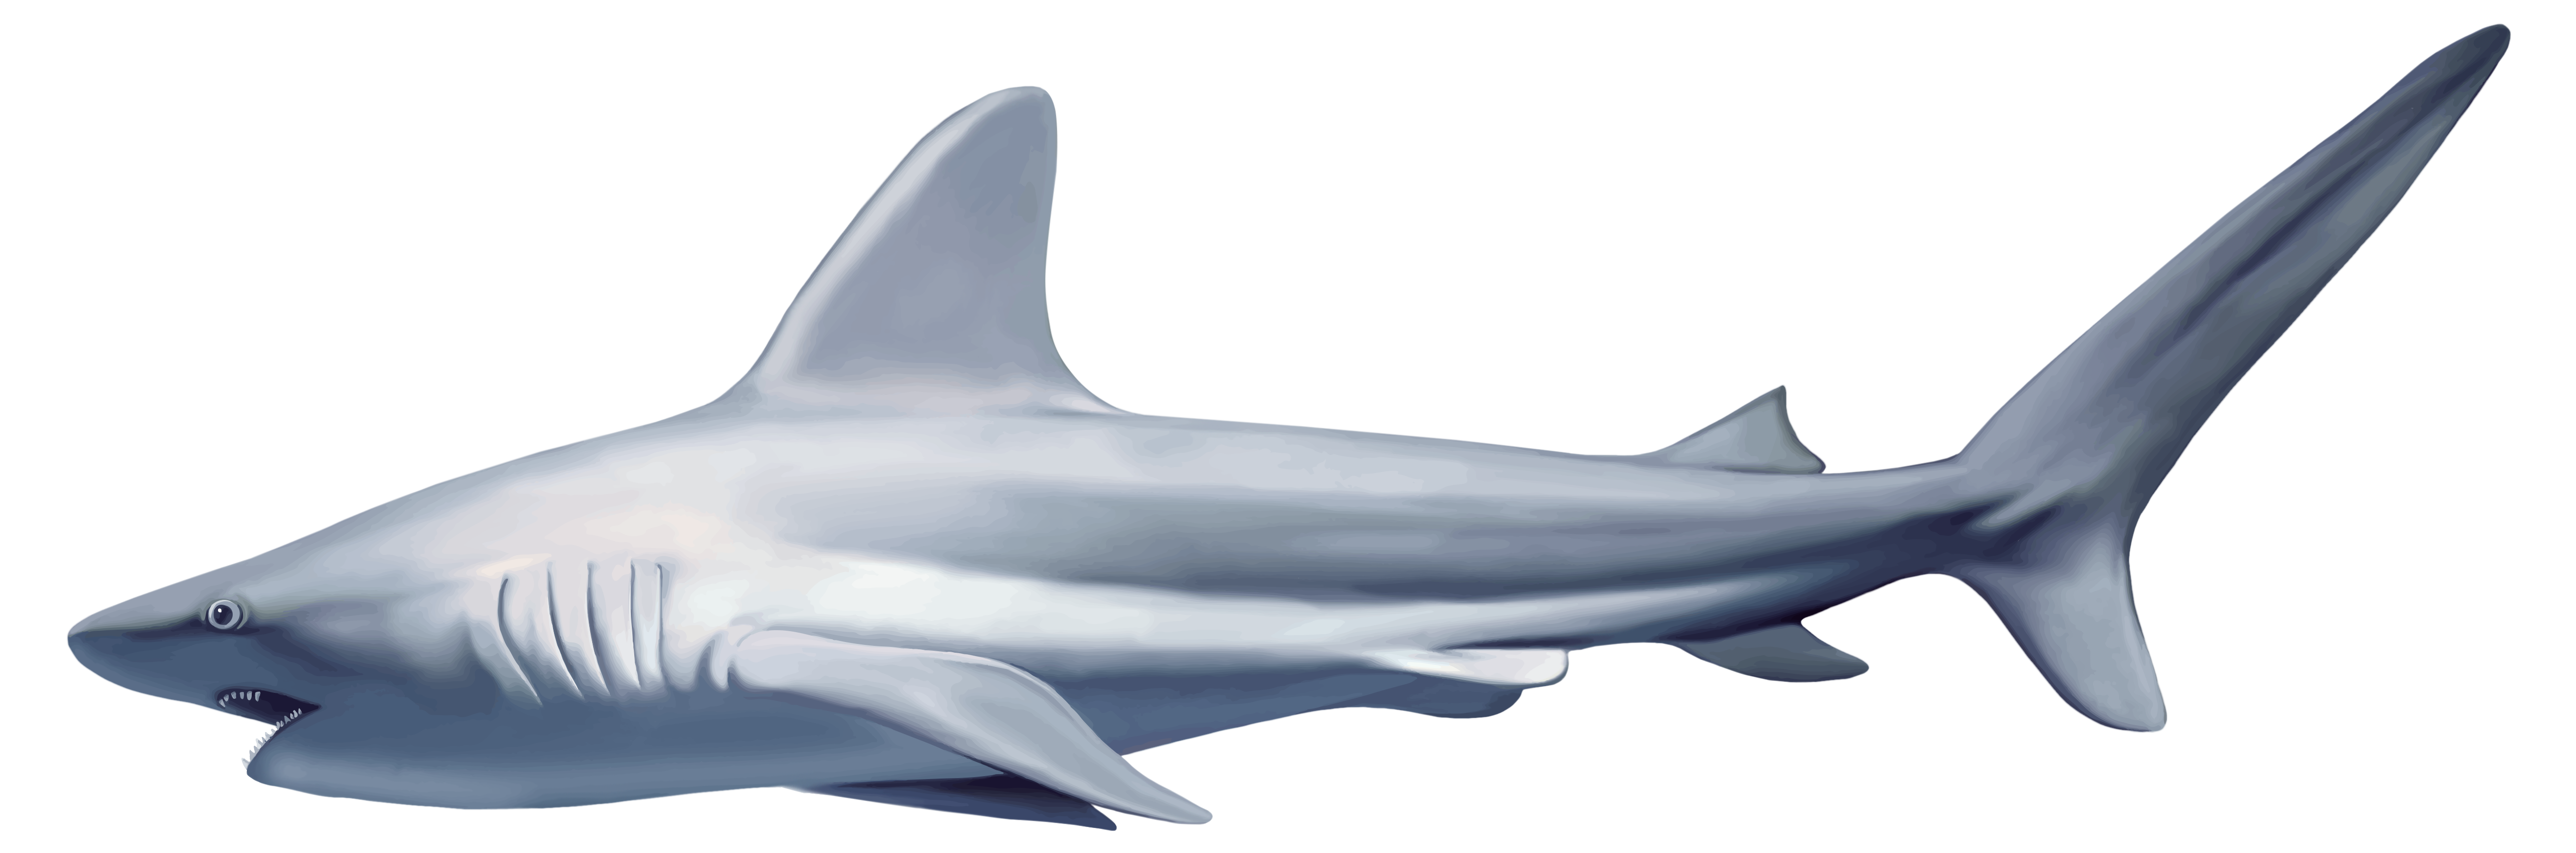 fish clipart shark